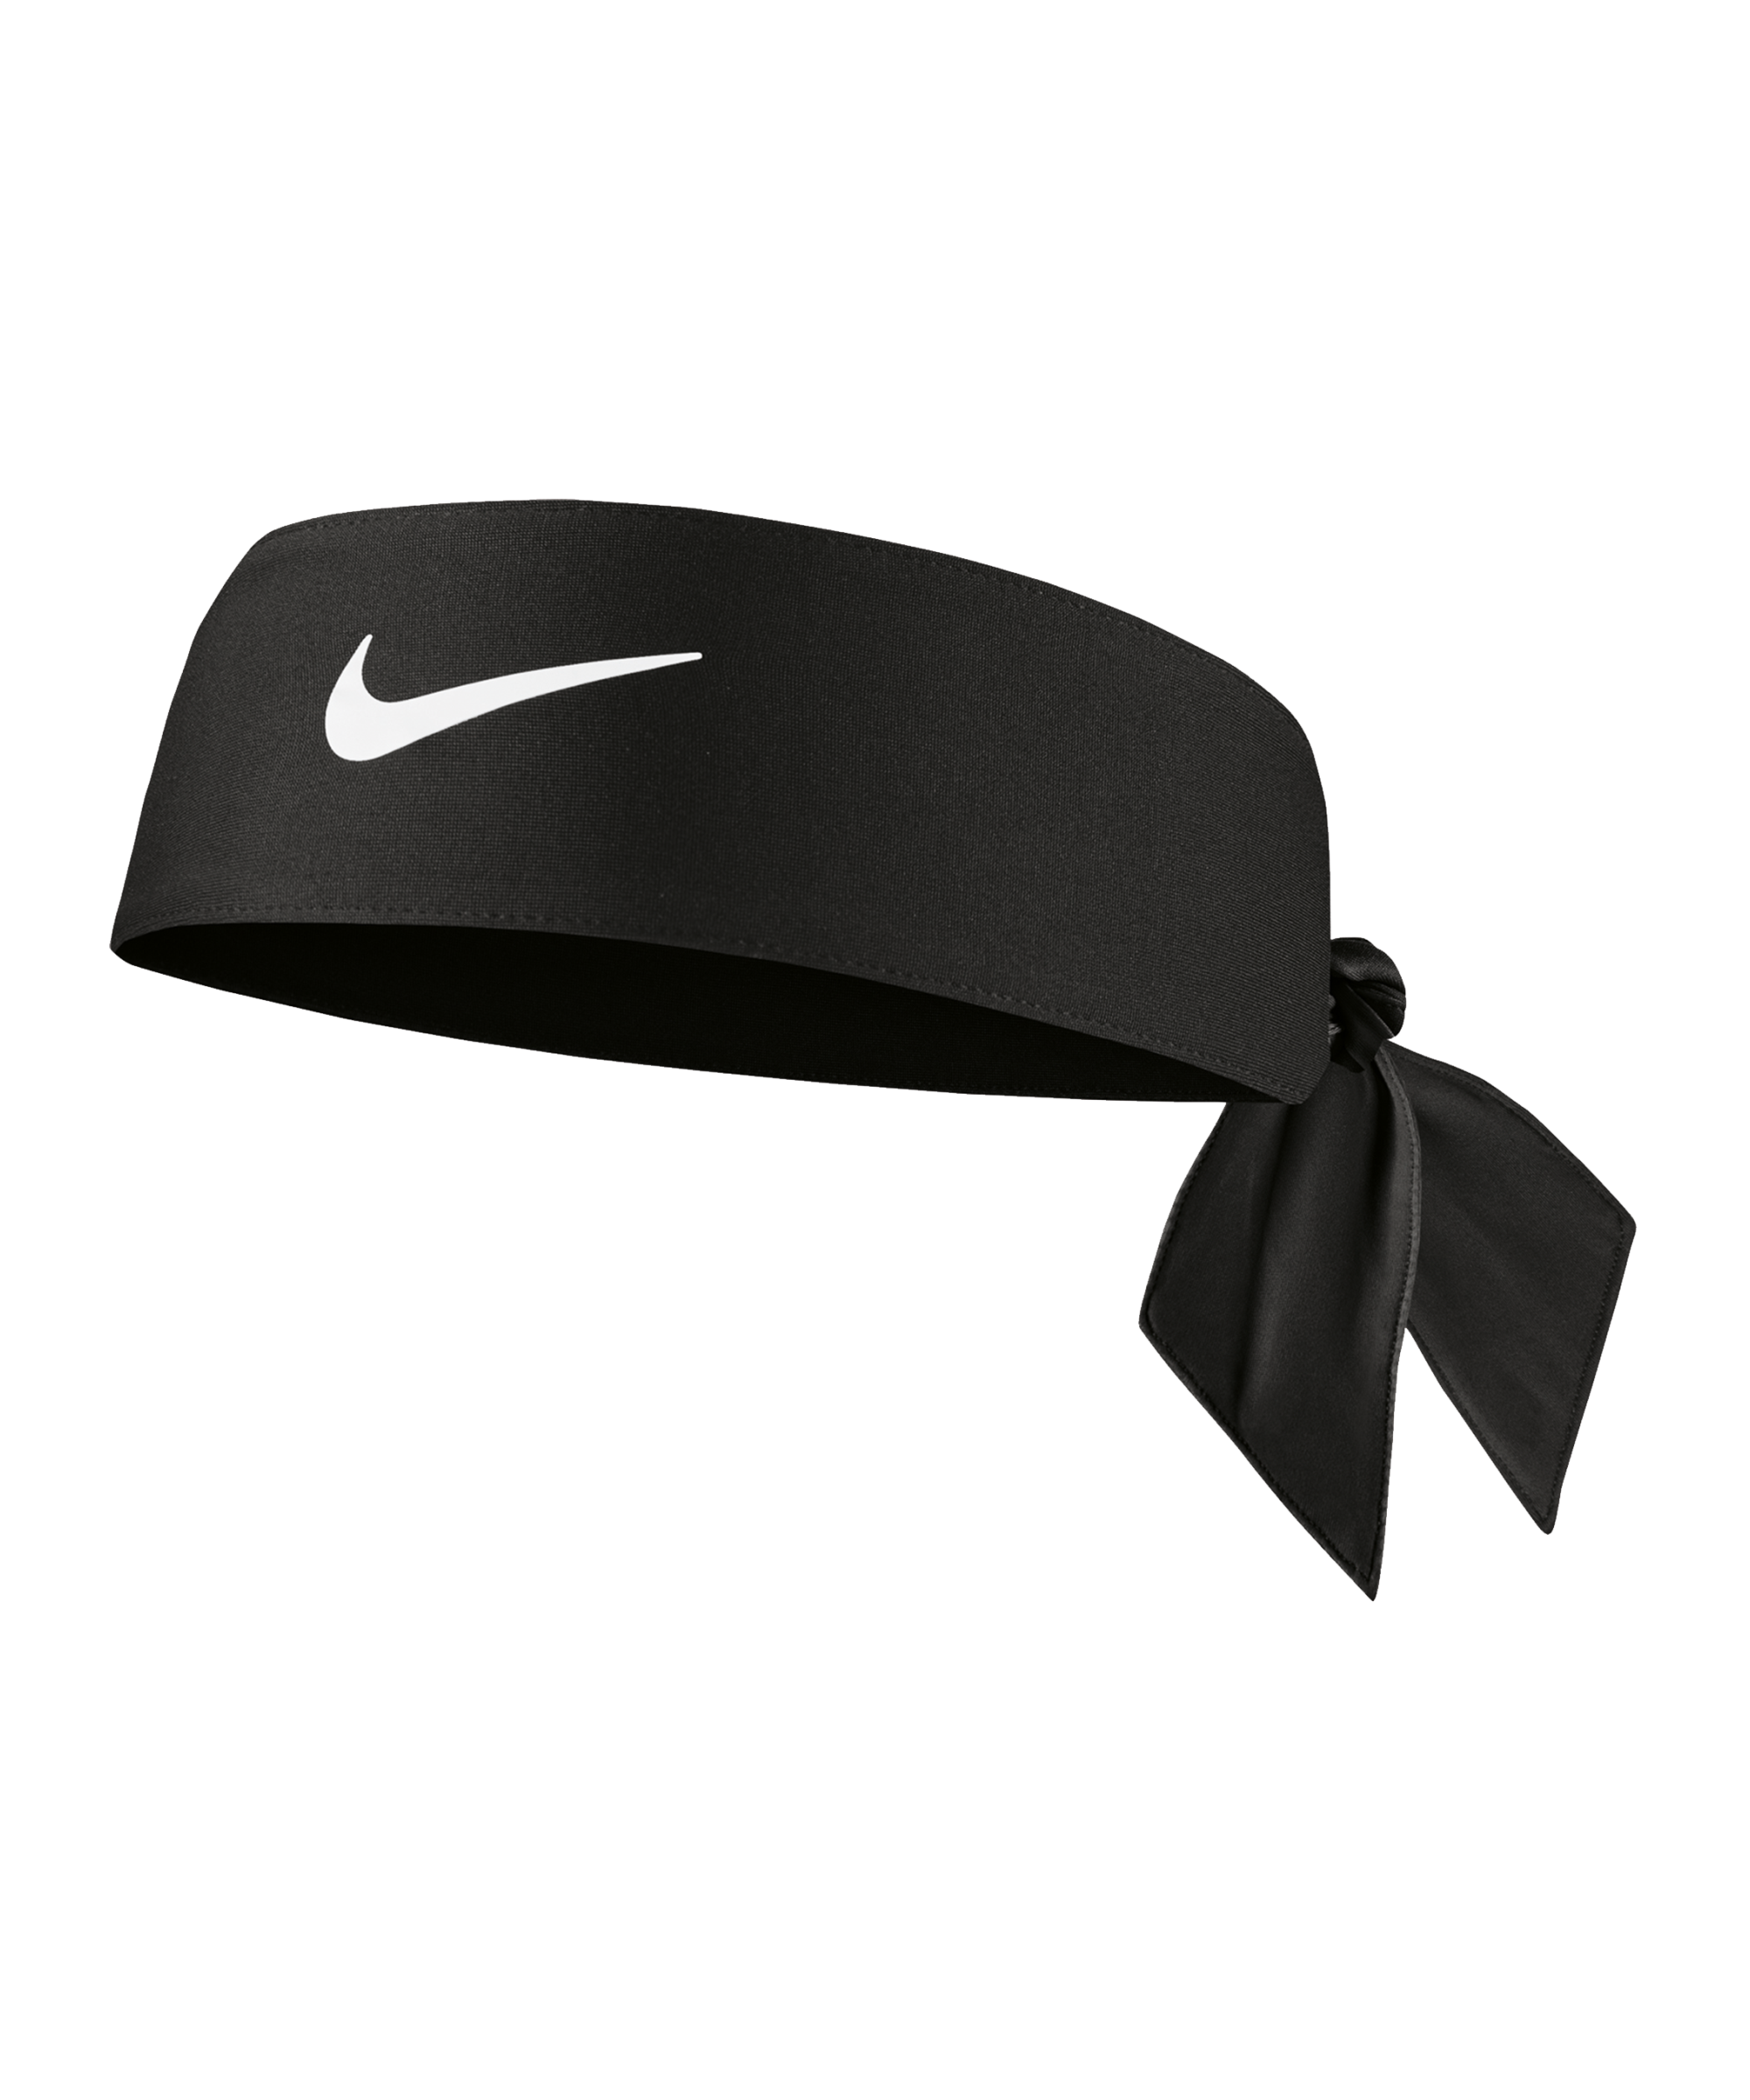 Nike Bandeau Nike DRI-FIT HEAD TIE 4.0  - Noir - Size: M - unisex